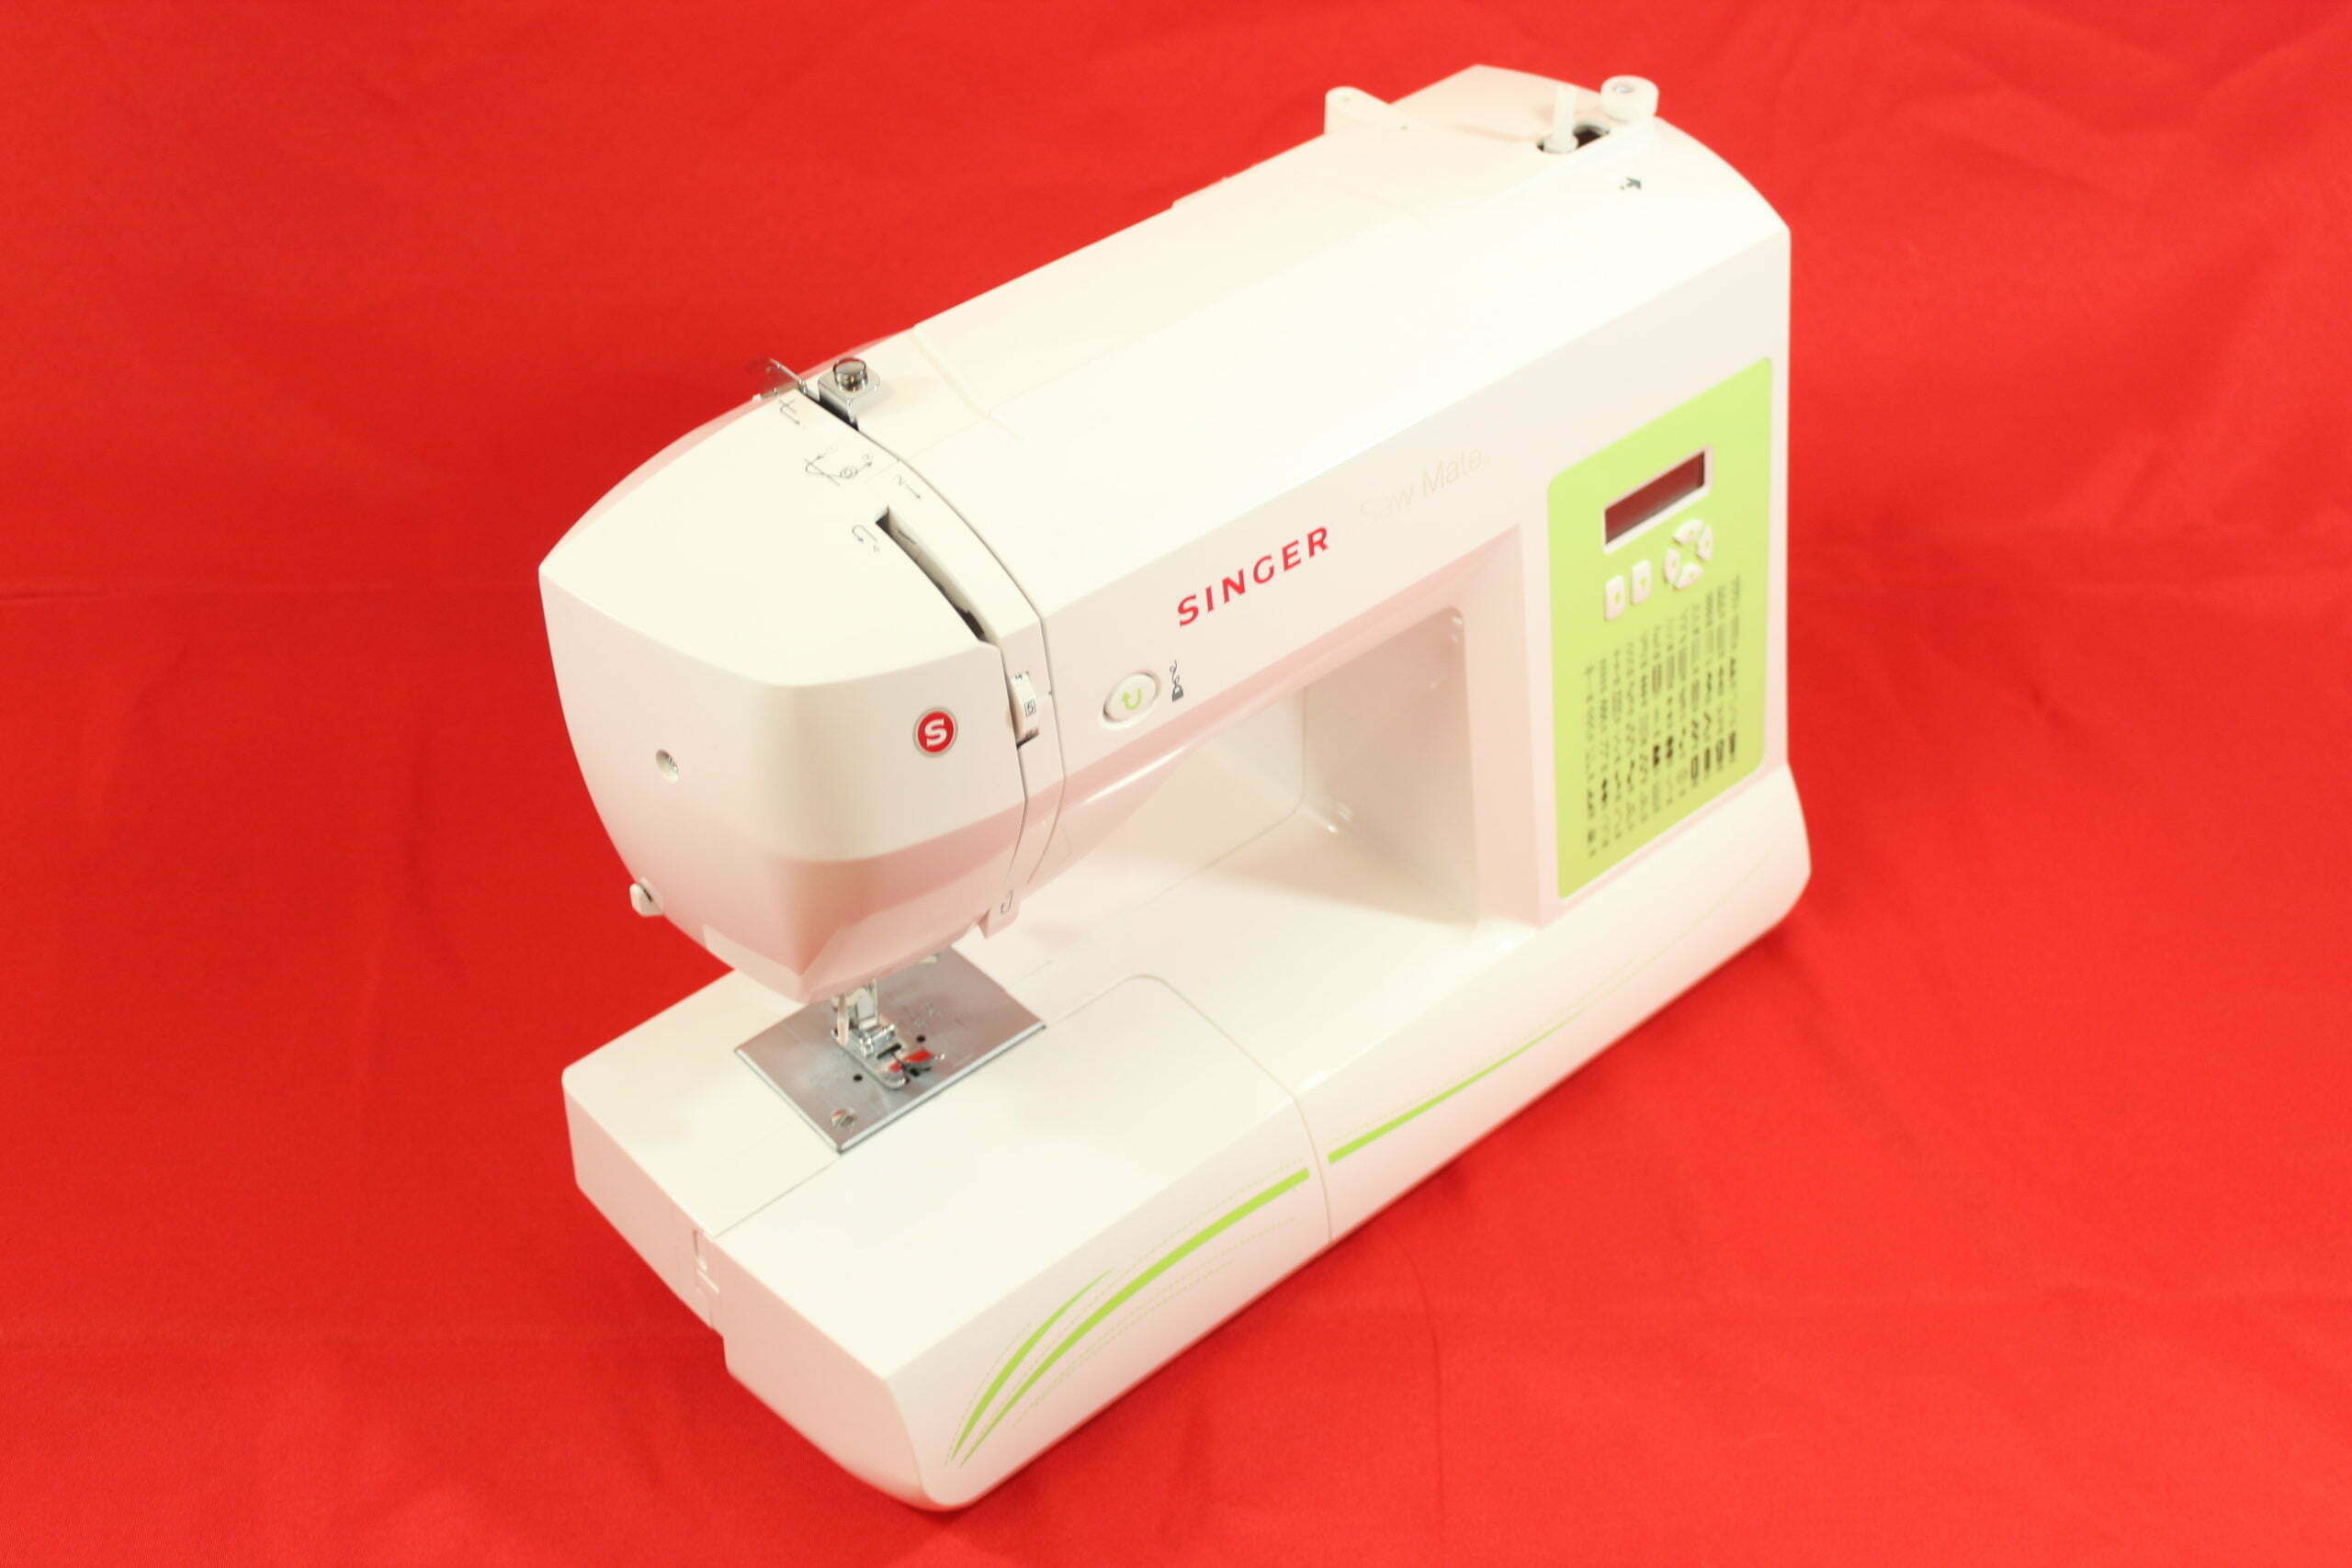 Singer 5400 Sew Mate 60-Stitch Sewing Machine, White